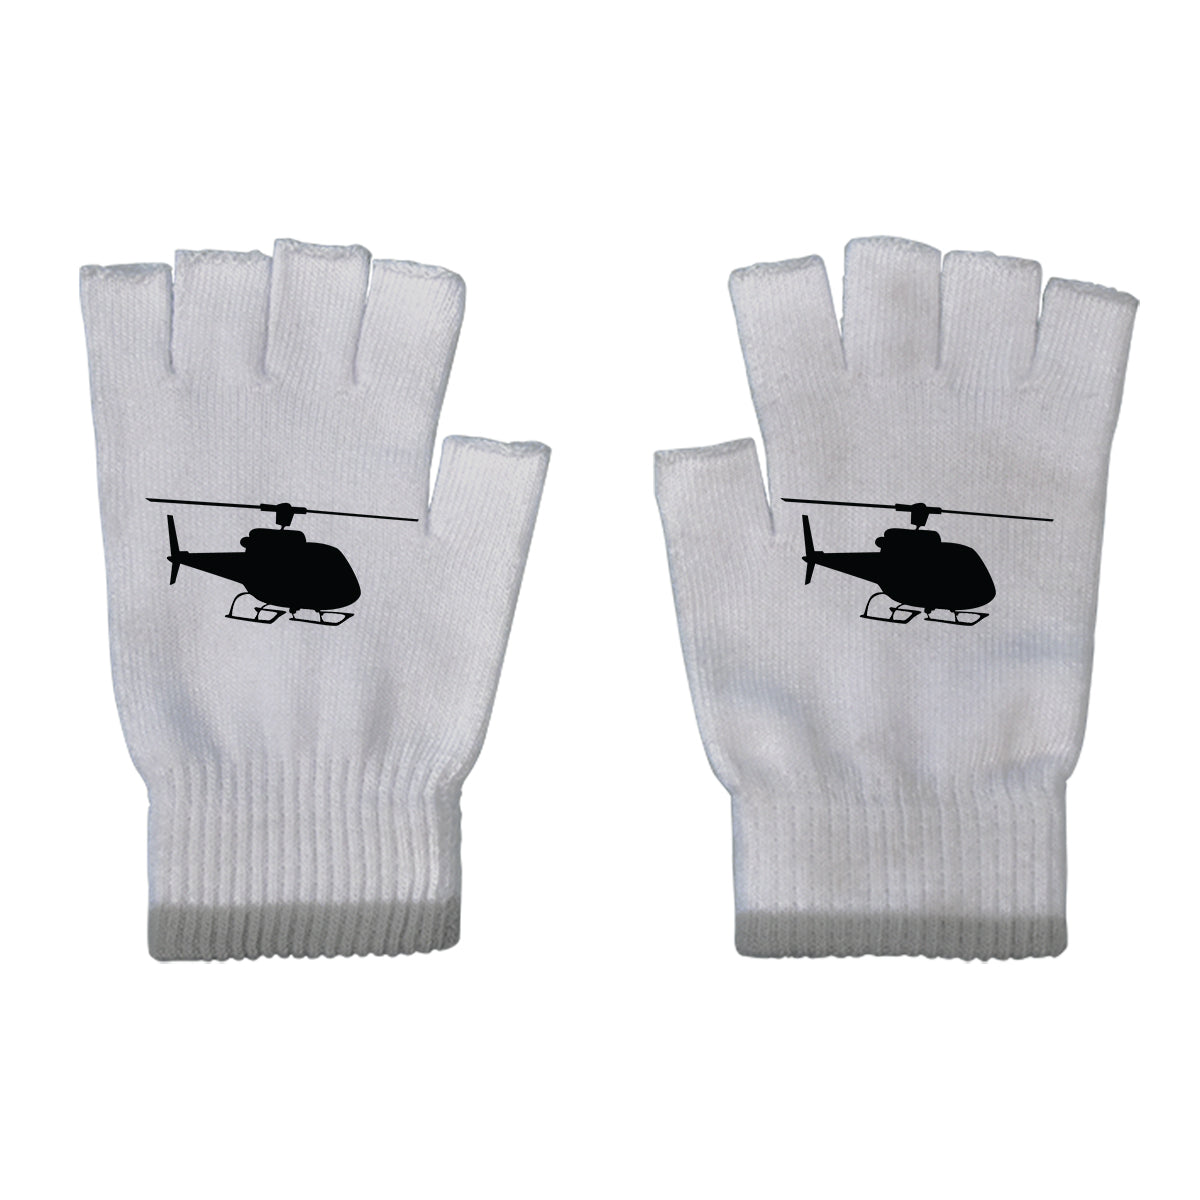 Helicopter Designed Cut Gloves